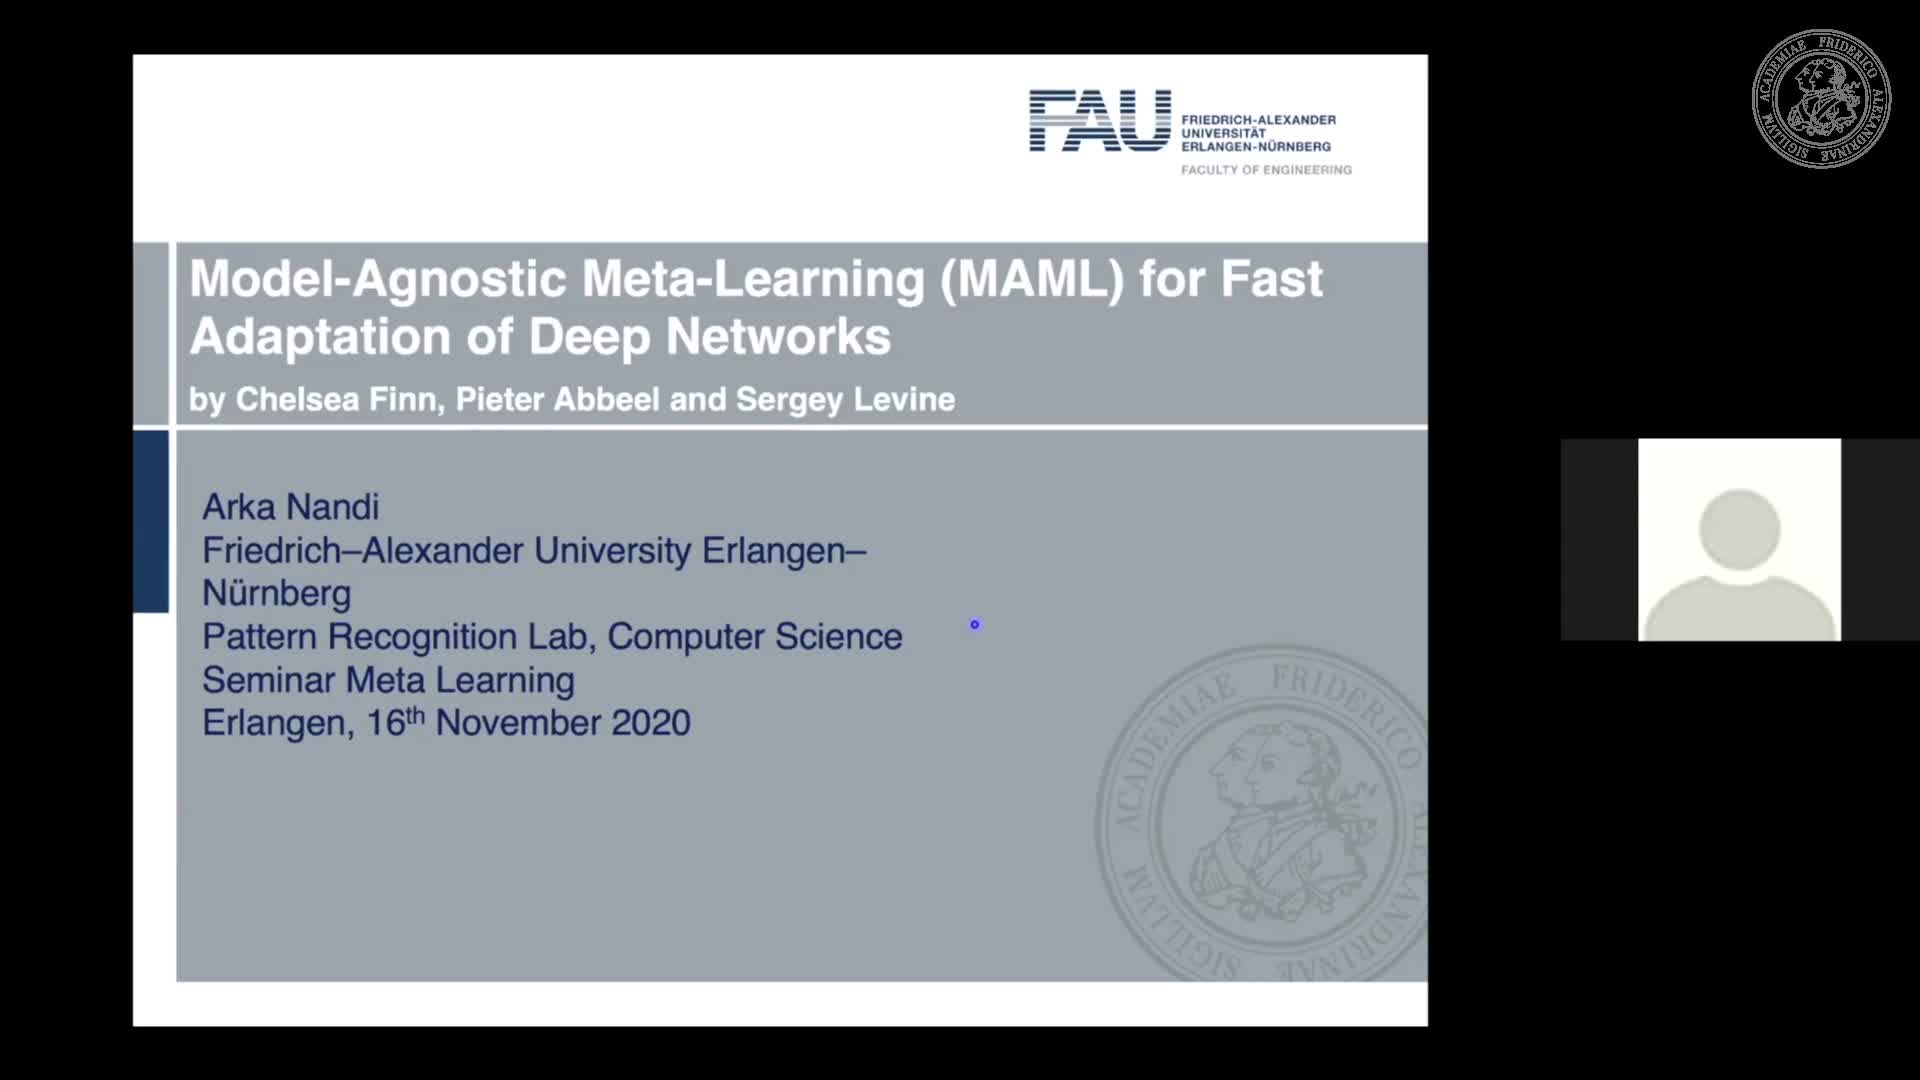 Seminar Meta Learning (SemMeL) - Arka Nandi - Model-Agnostic Meta-Learning for Fast Adaptation of Deep Networks preview image